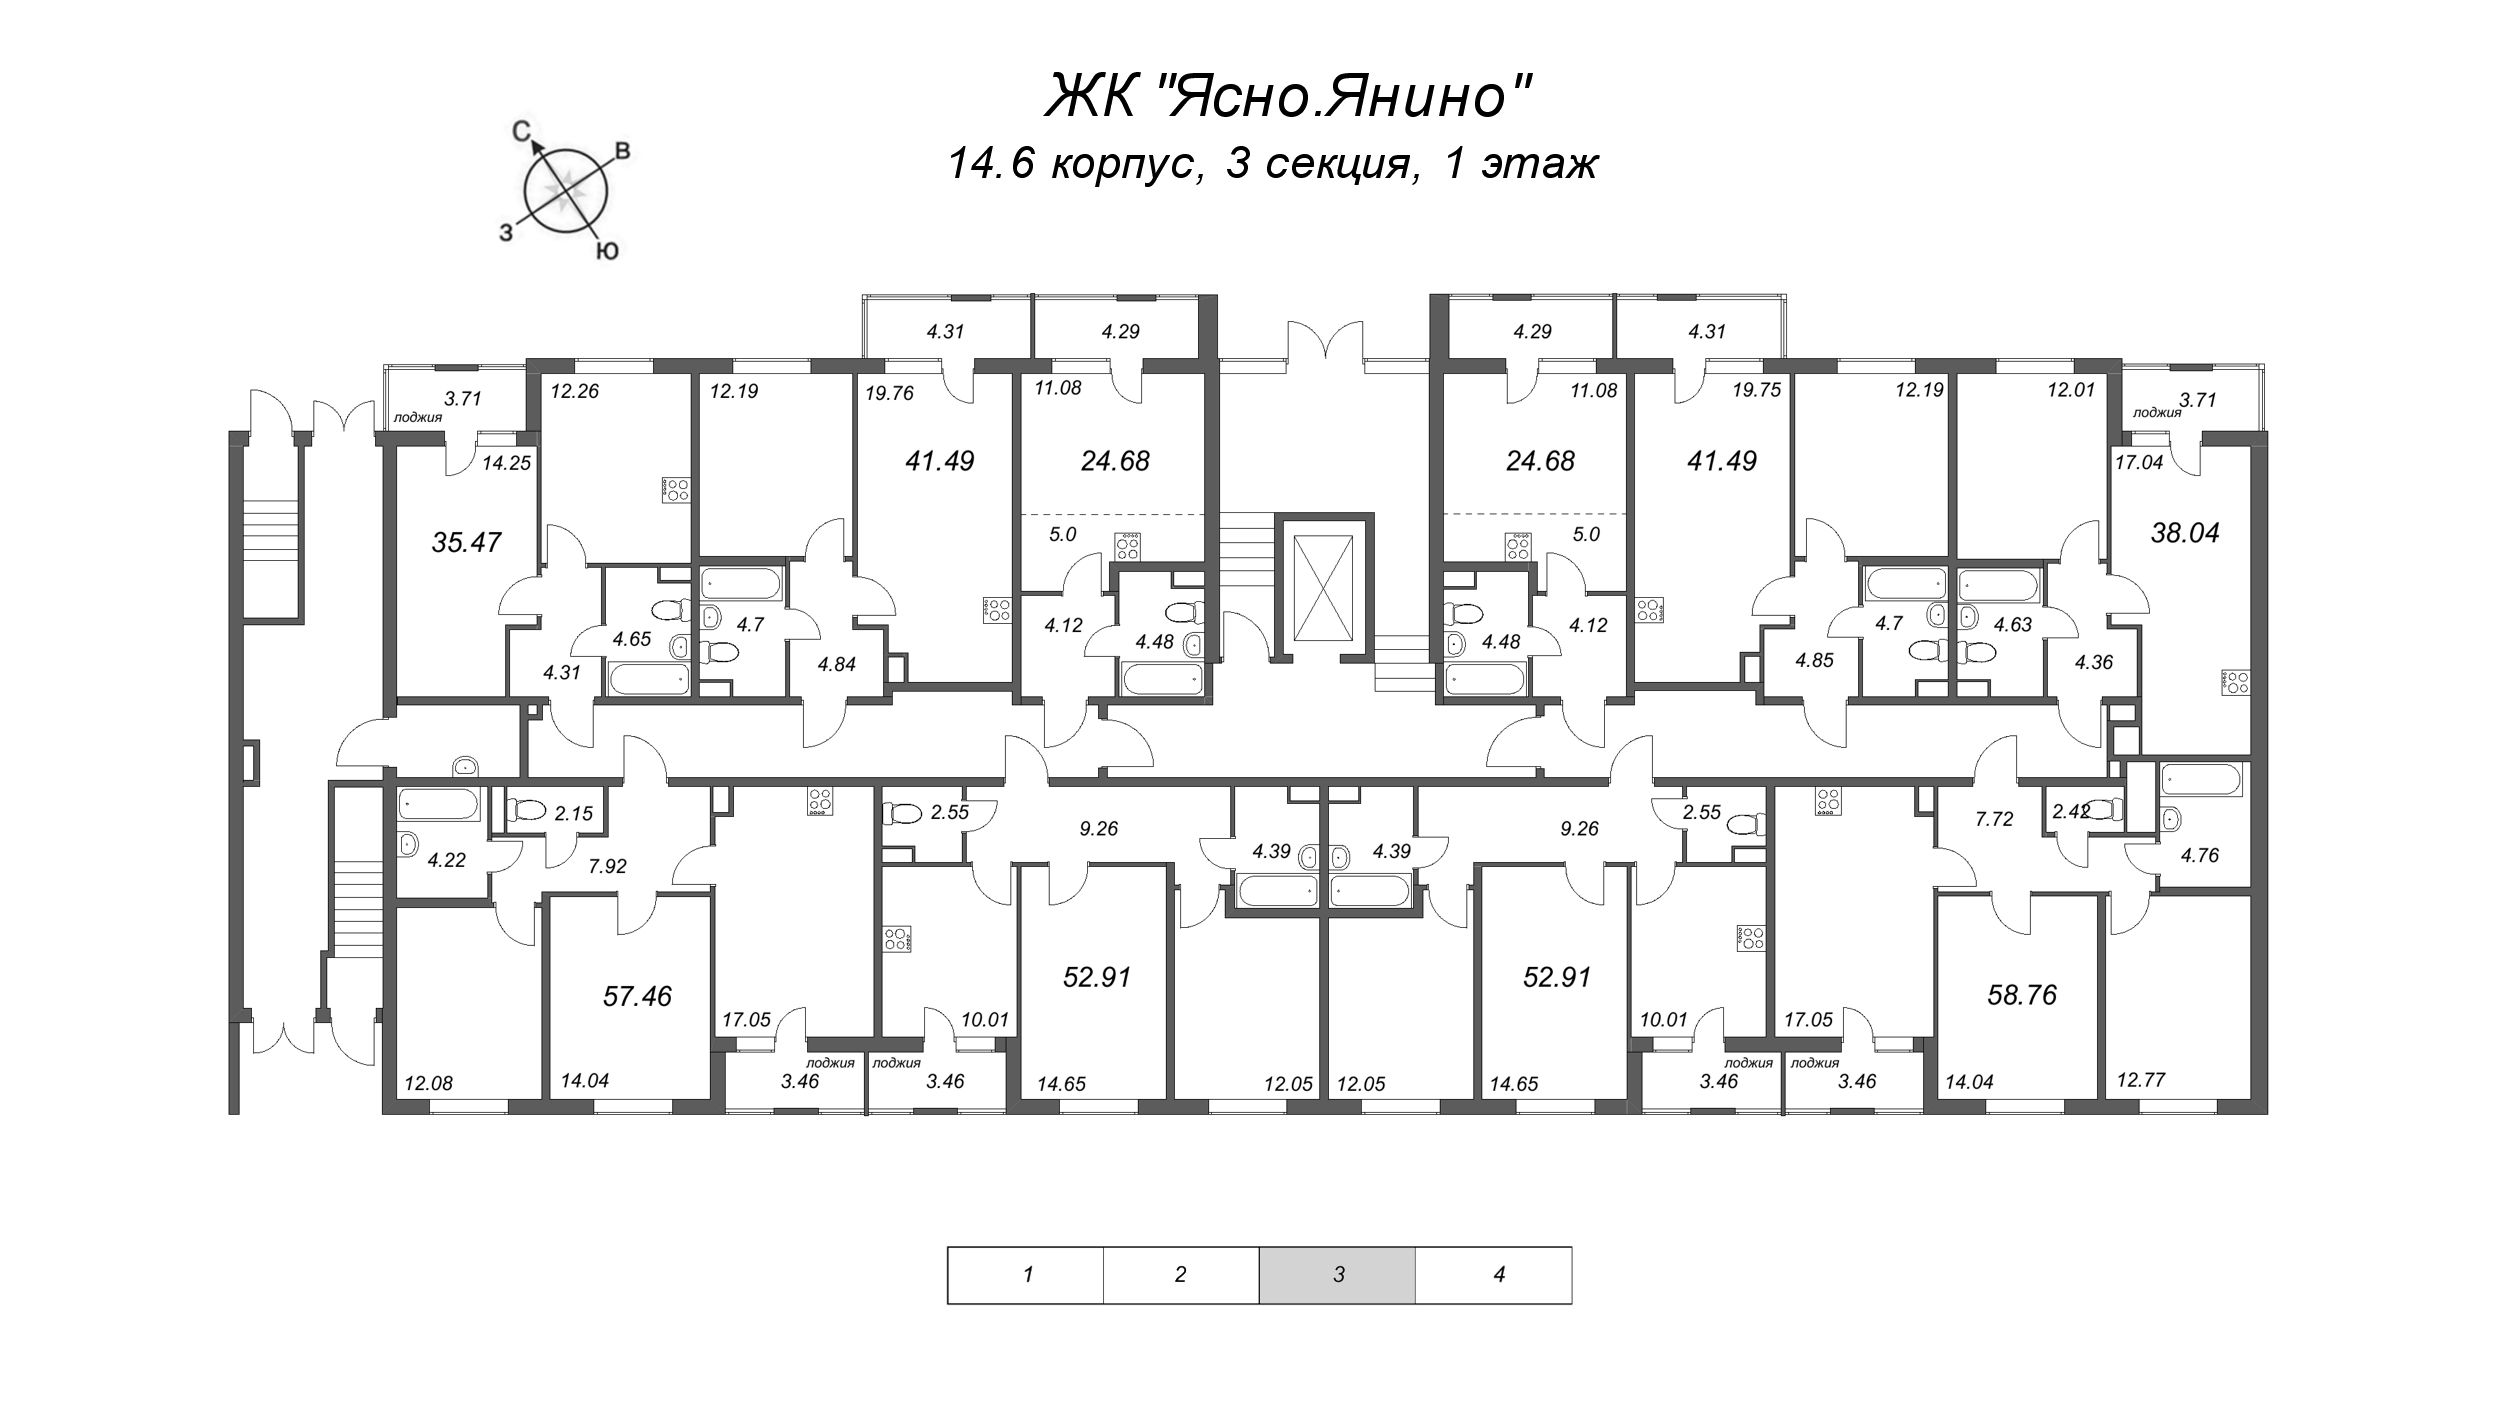 2-комнатная (Евро) квартира, 38.04 м² в ЖК "Ясно.Янино" - планировка этажа